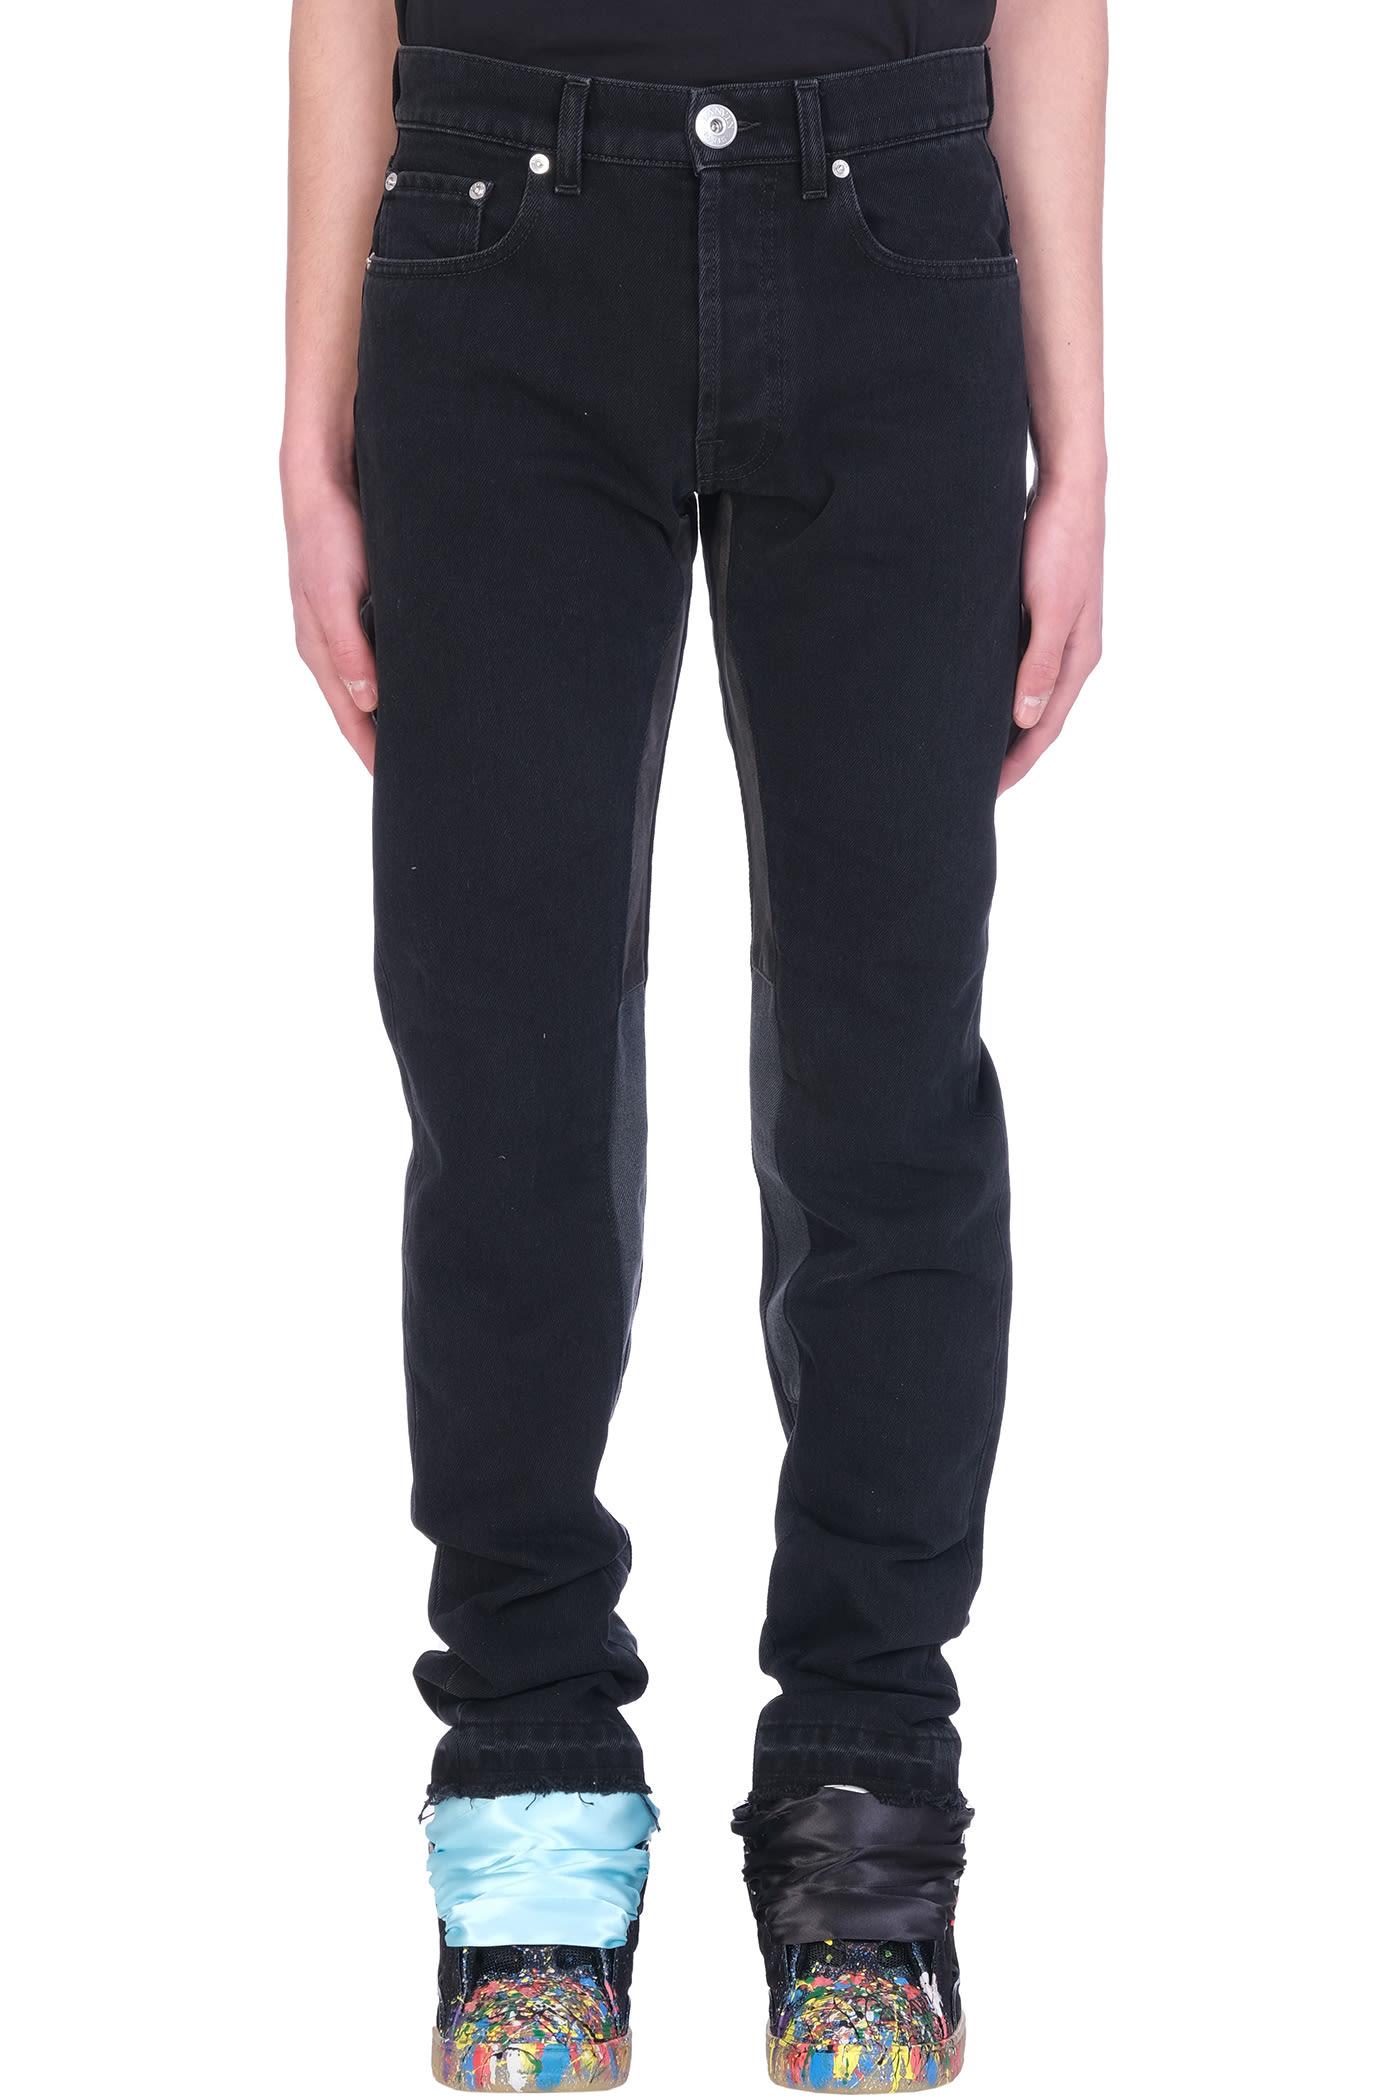 GALLERY DEPT. Jeans In Cotton in Black for Men | Lyst